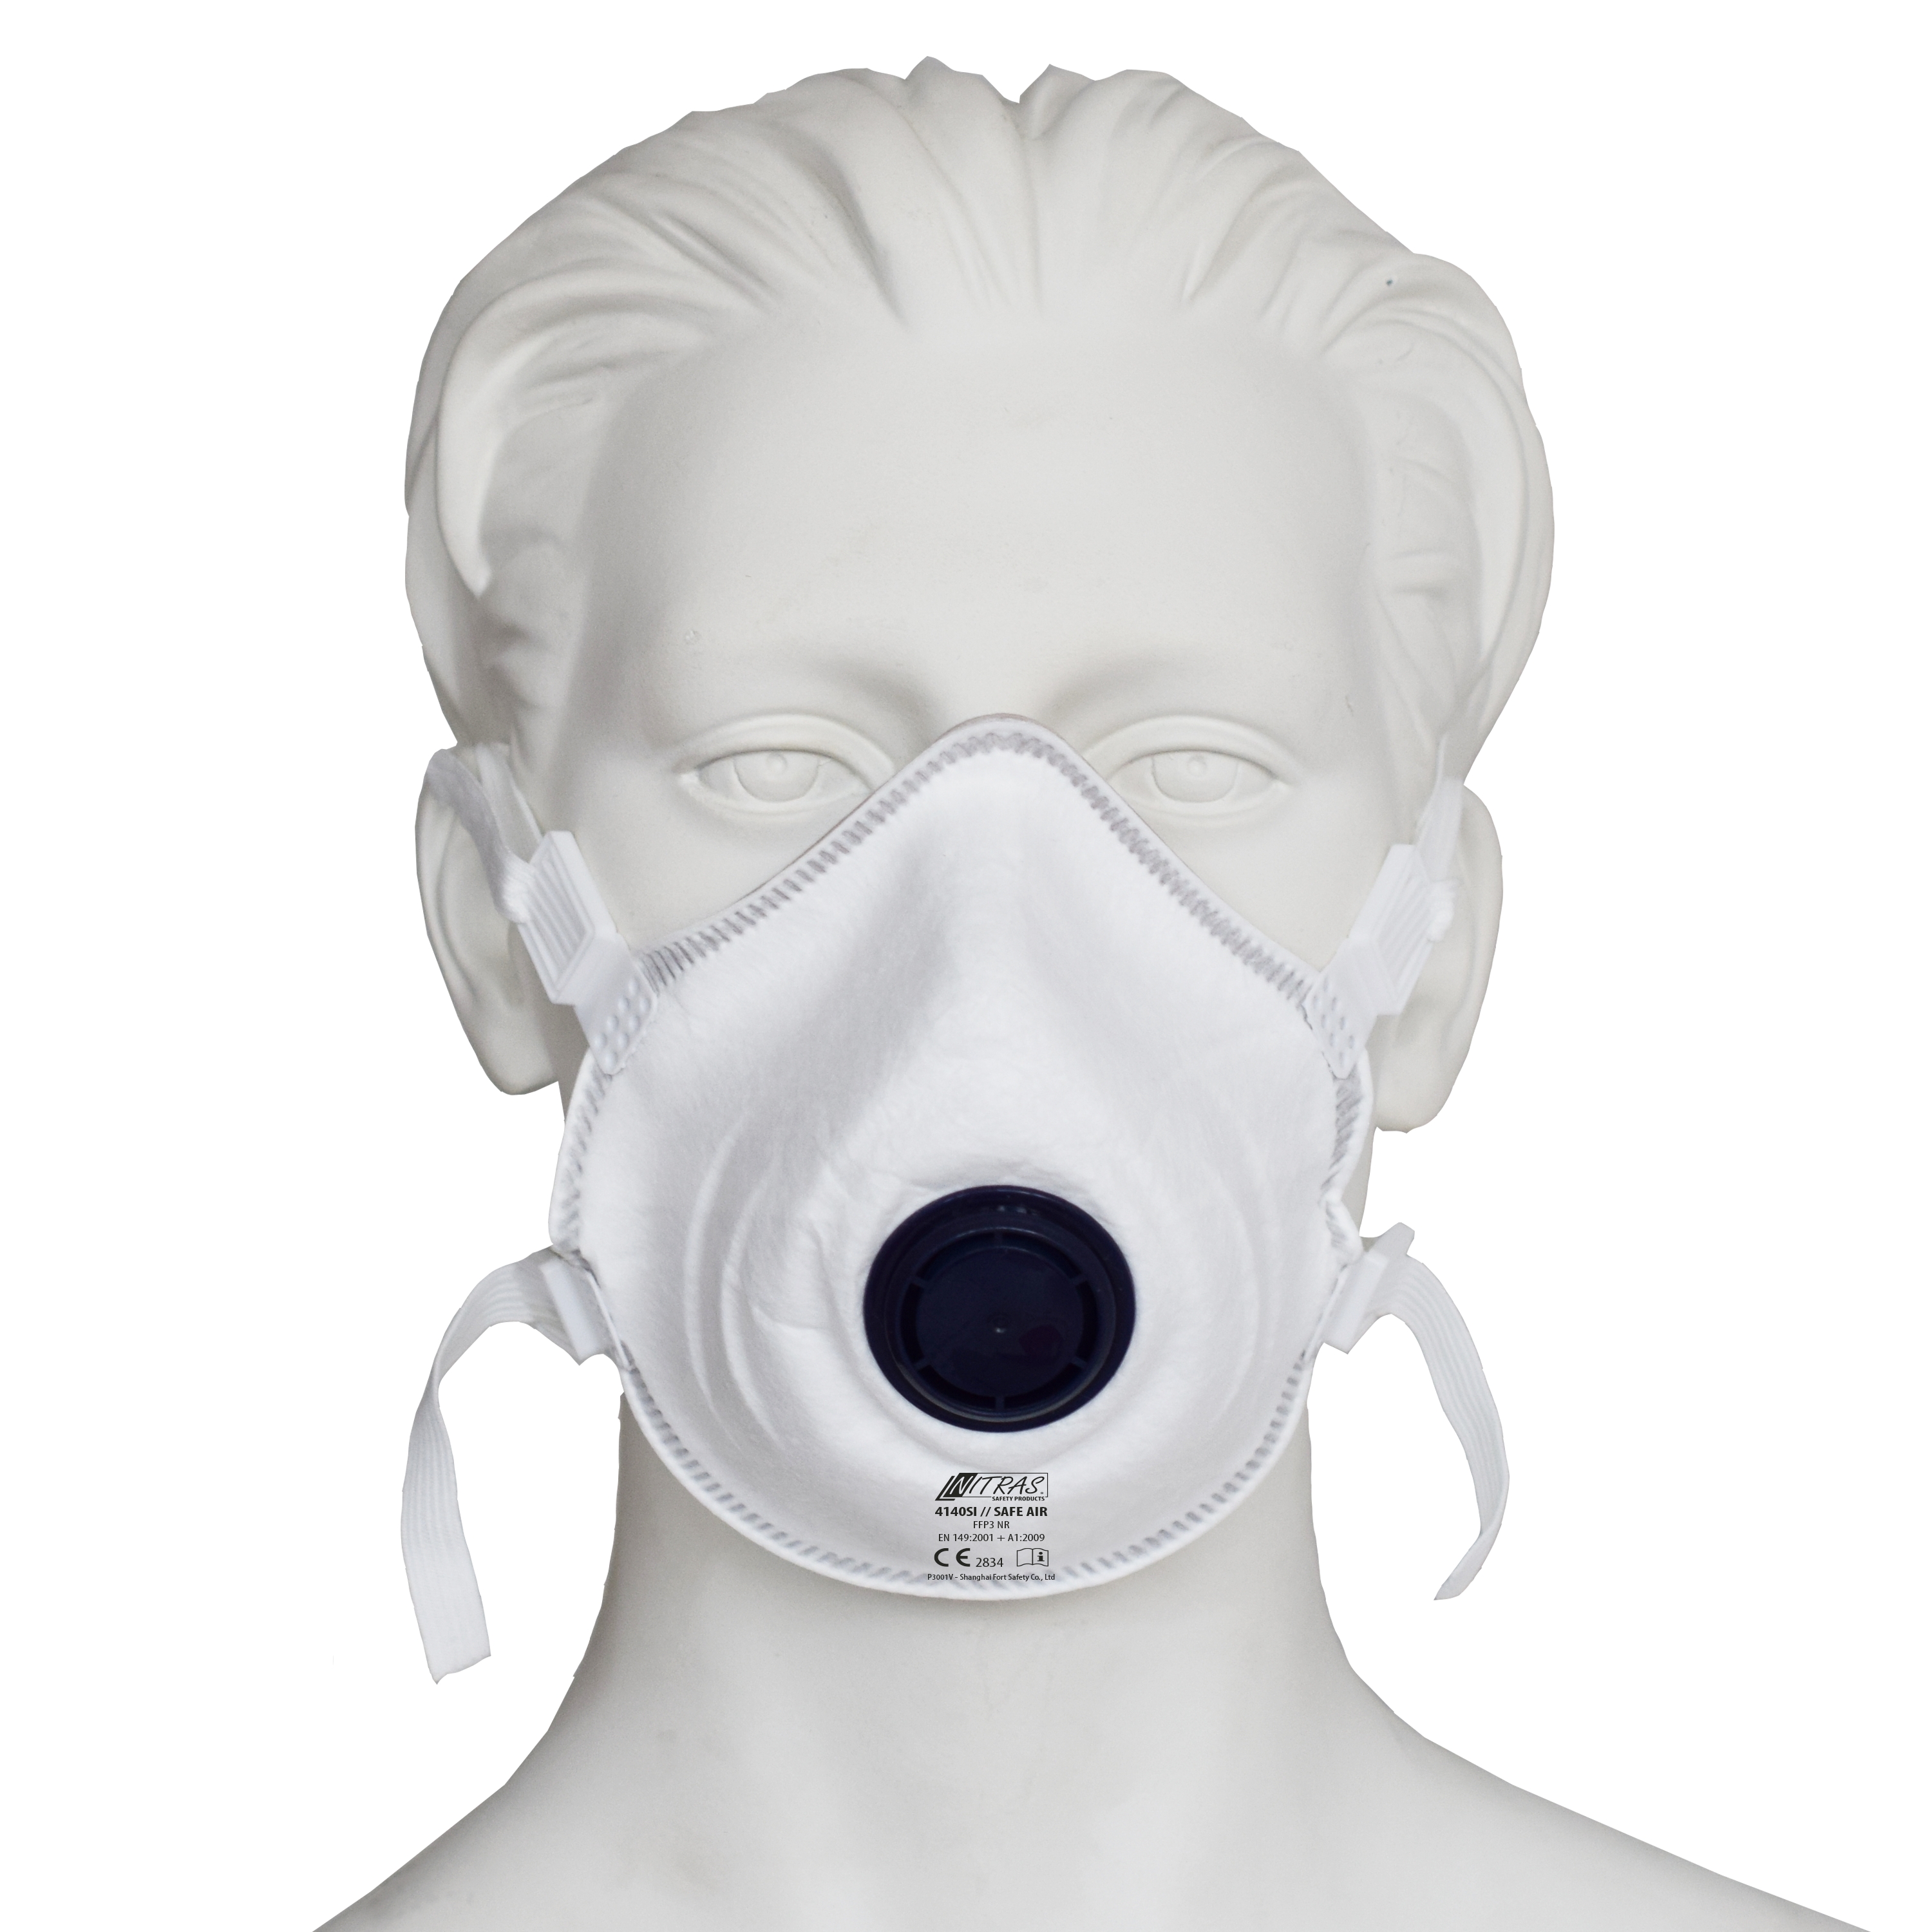 NITRAS SAFE AIR Respirator Mask